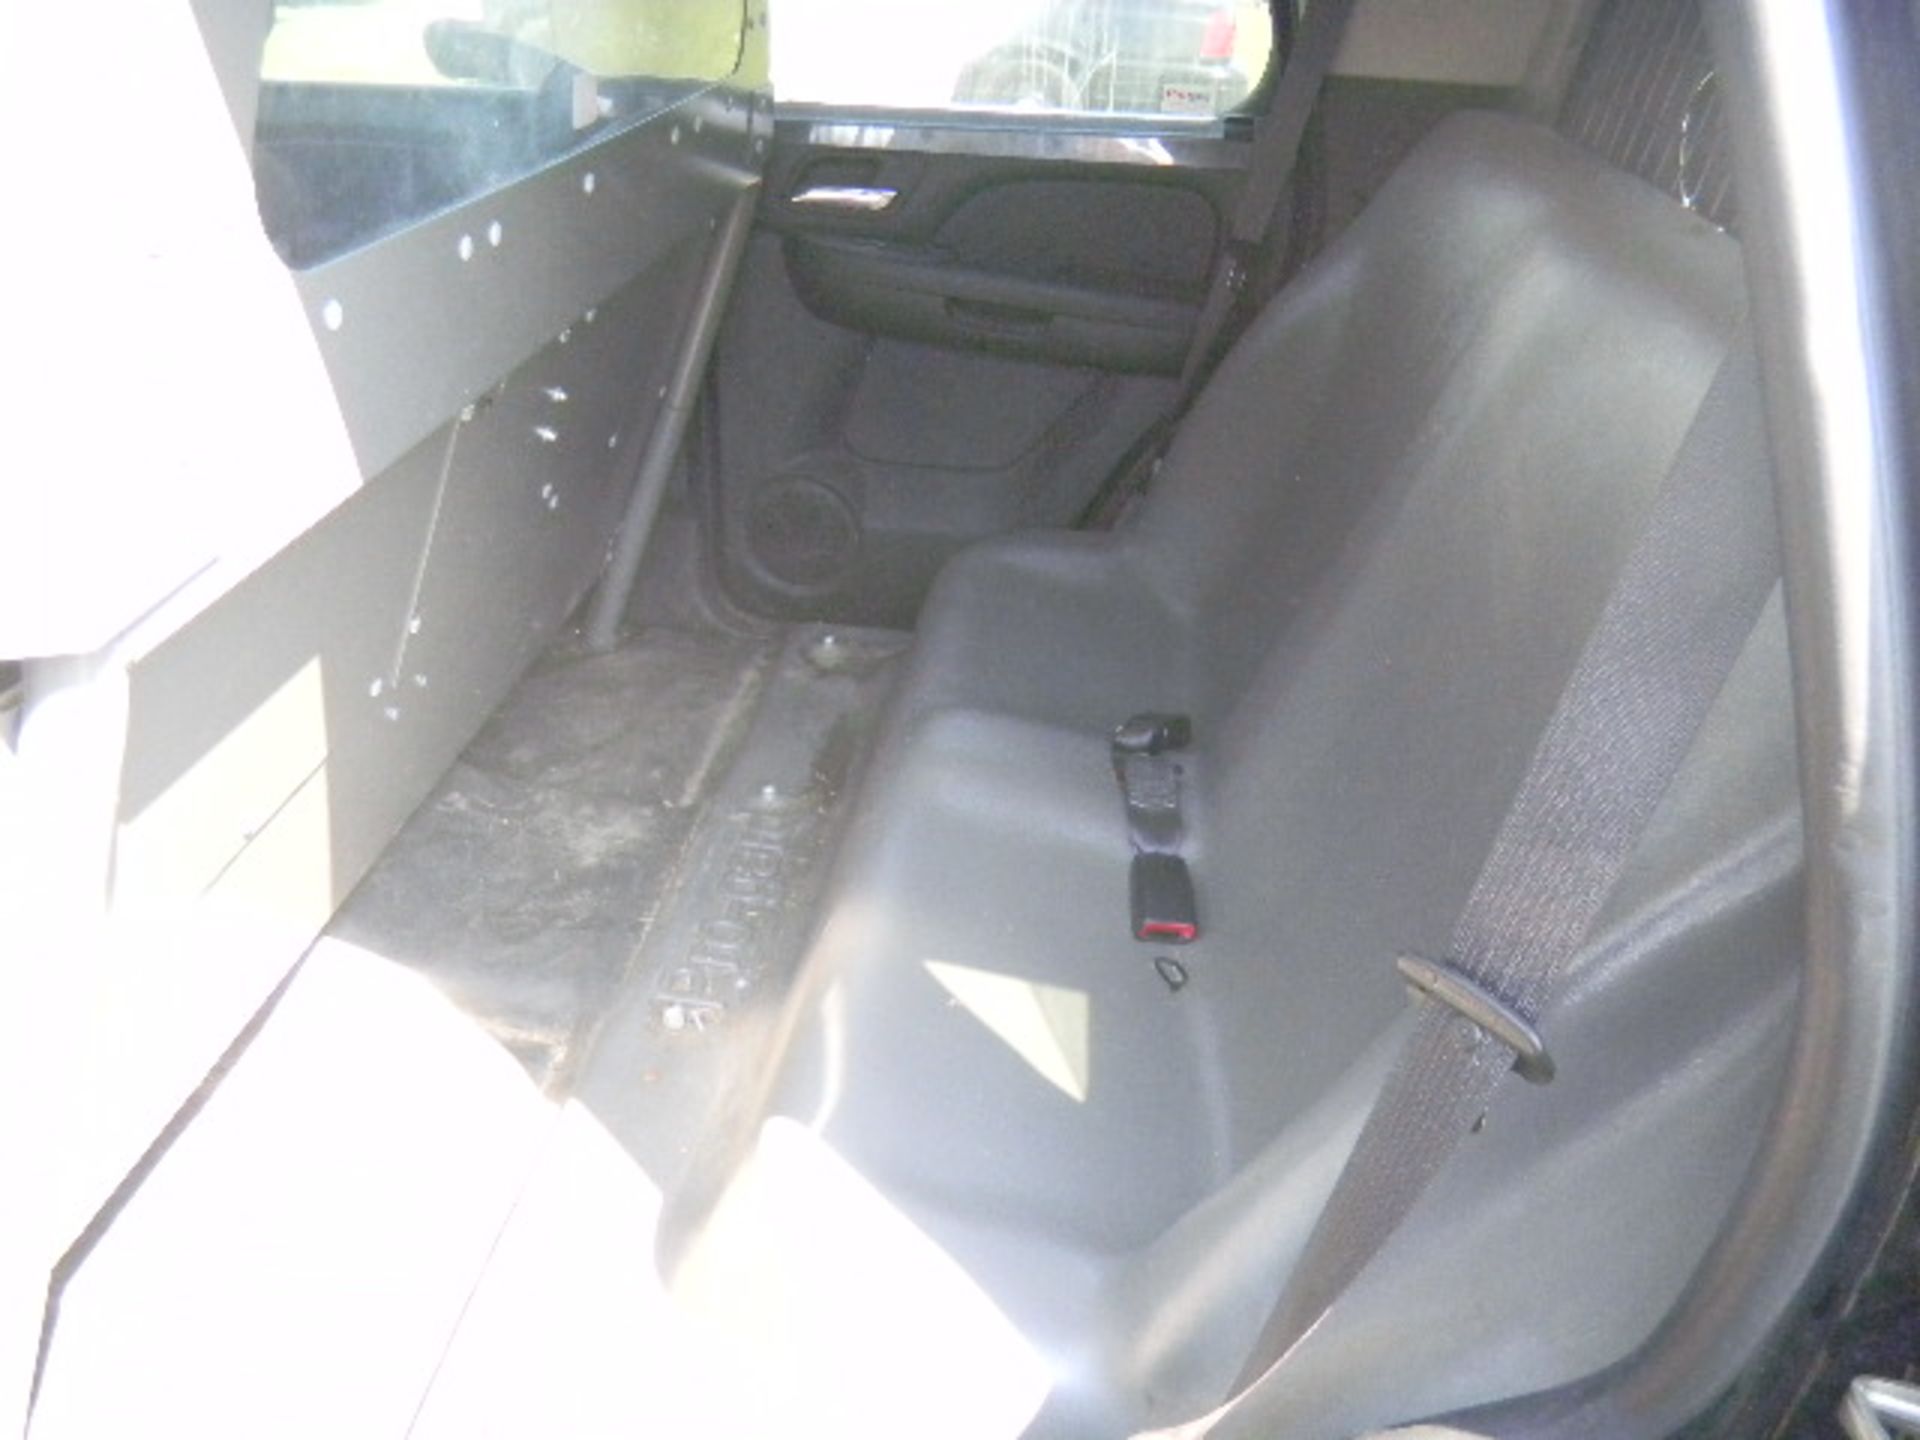 2013 Chevrolet Tahoe Patrol SUV - Condition Fair - Asset I.D. (460) - Last of Vin (DR283020) - Image 9 of 10